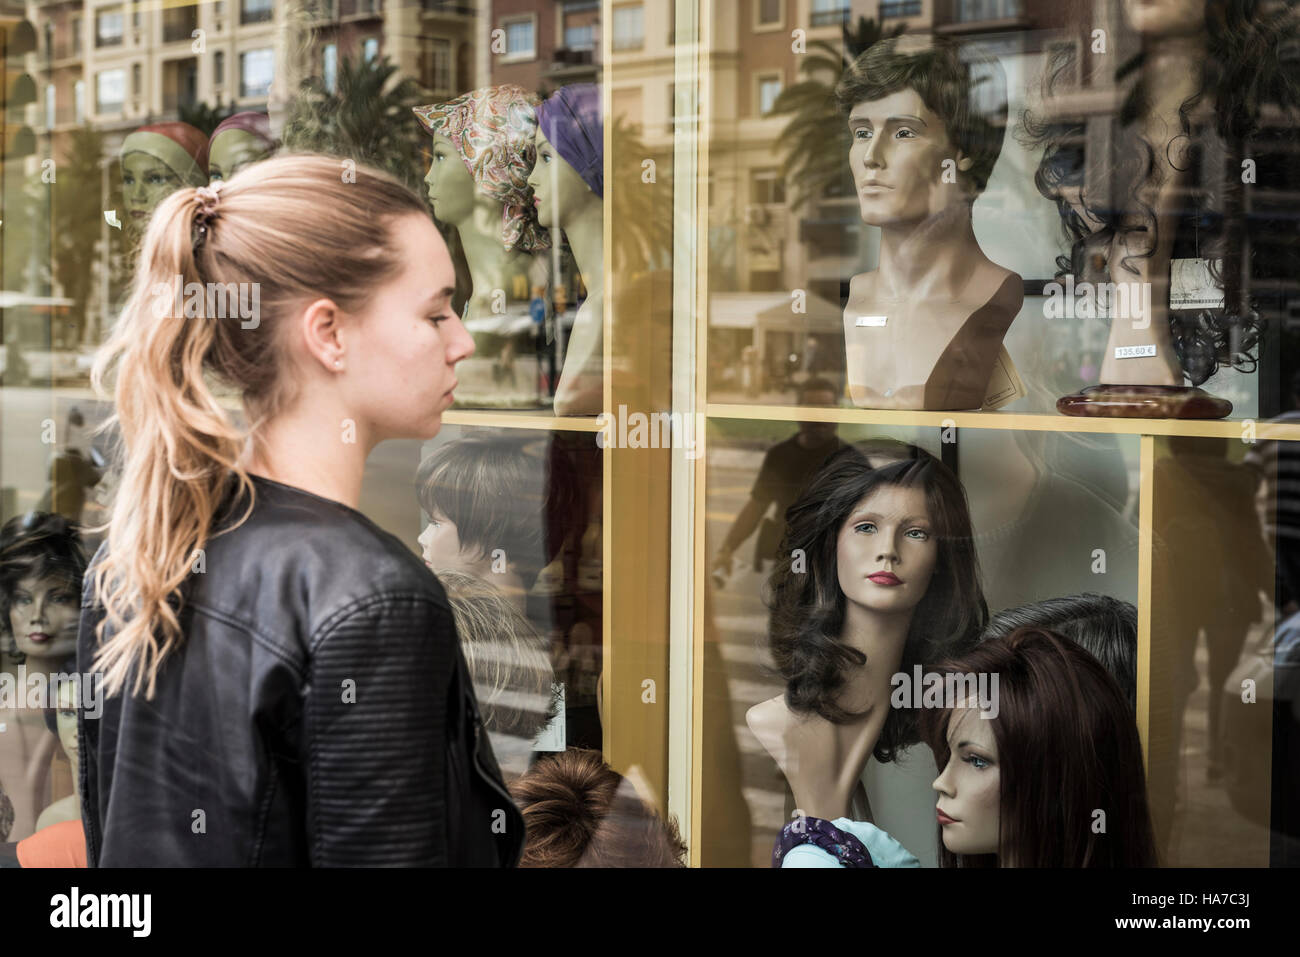 Teenager looking at a shop window, Malaga, Andalusia, Spain. Stock Photo